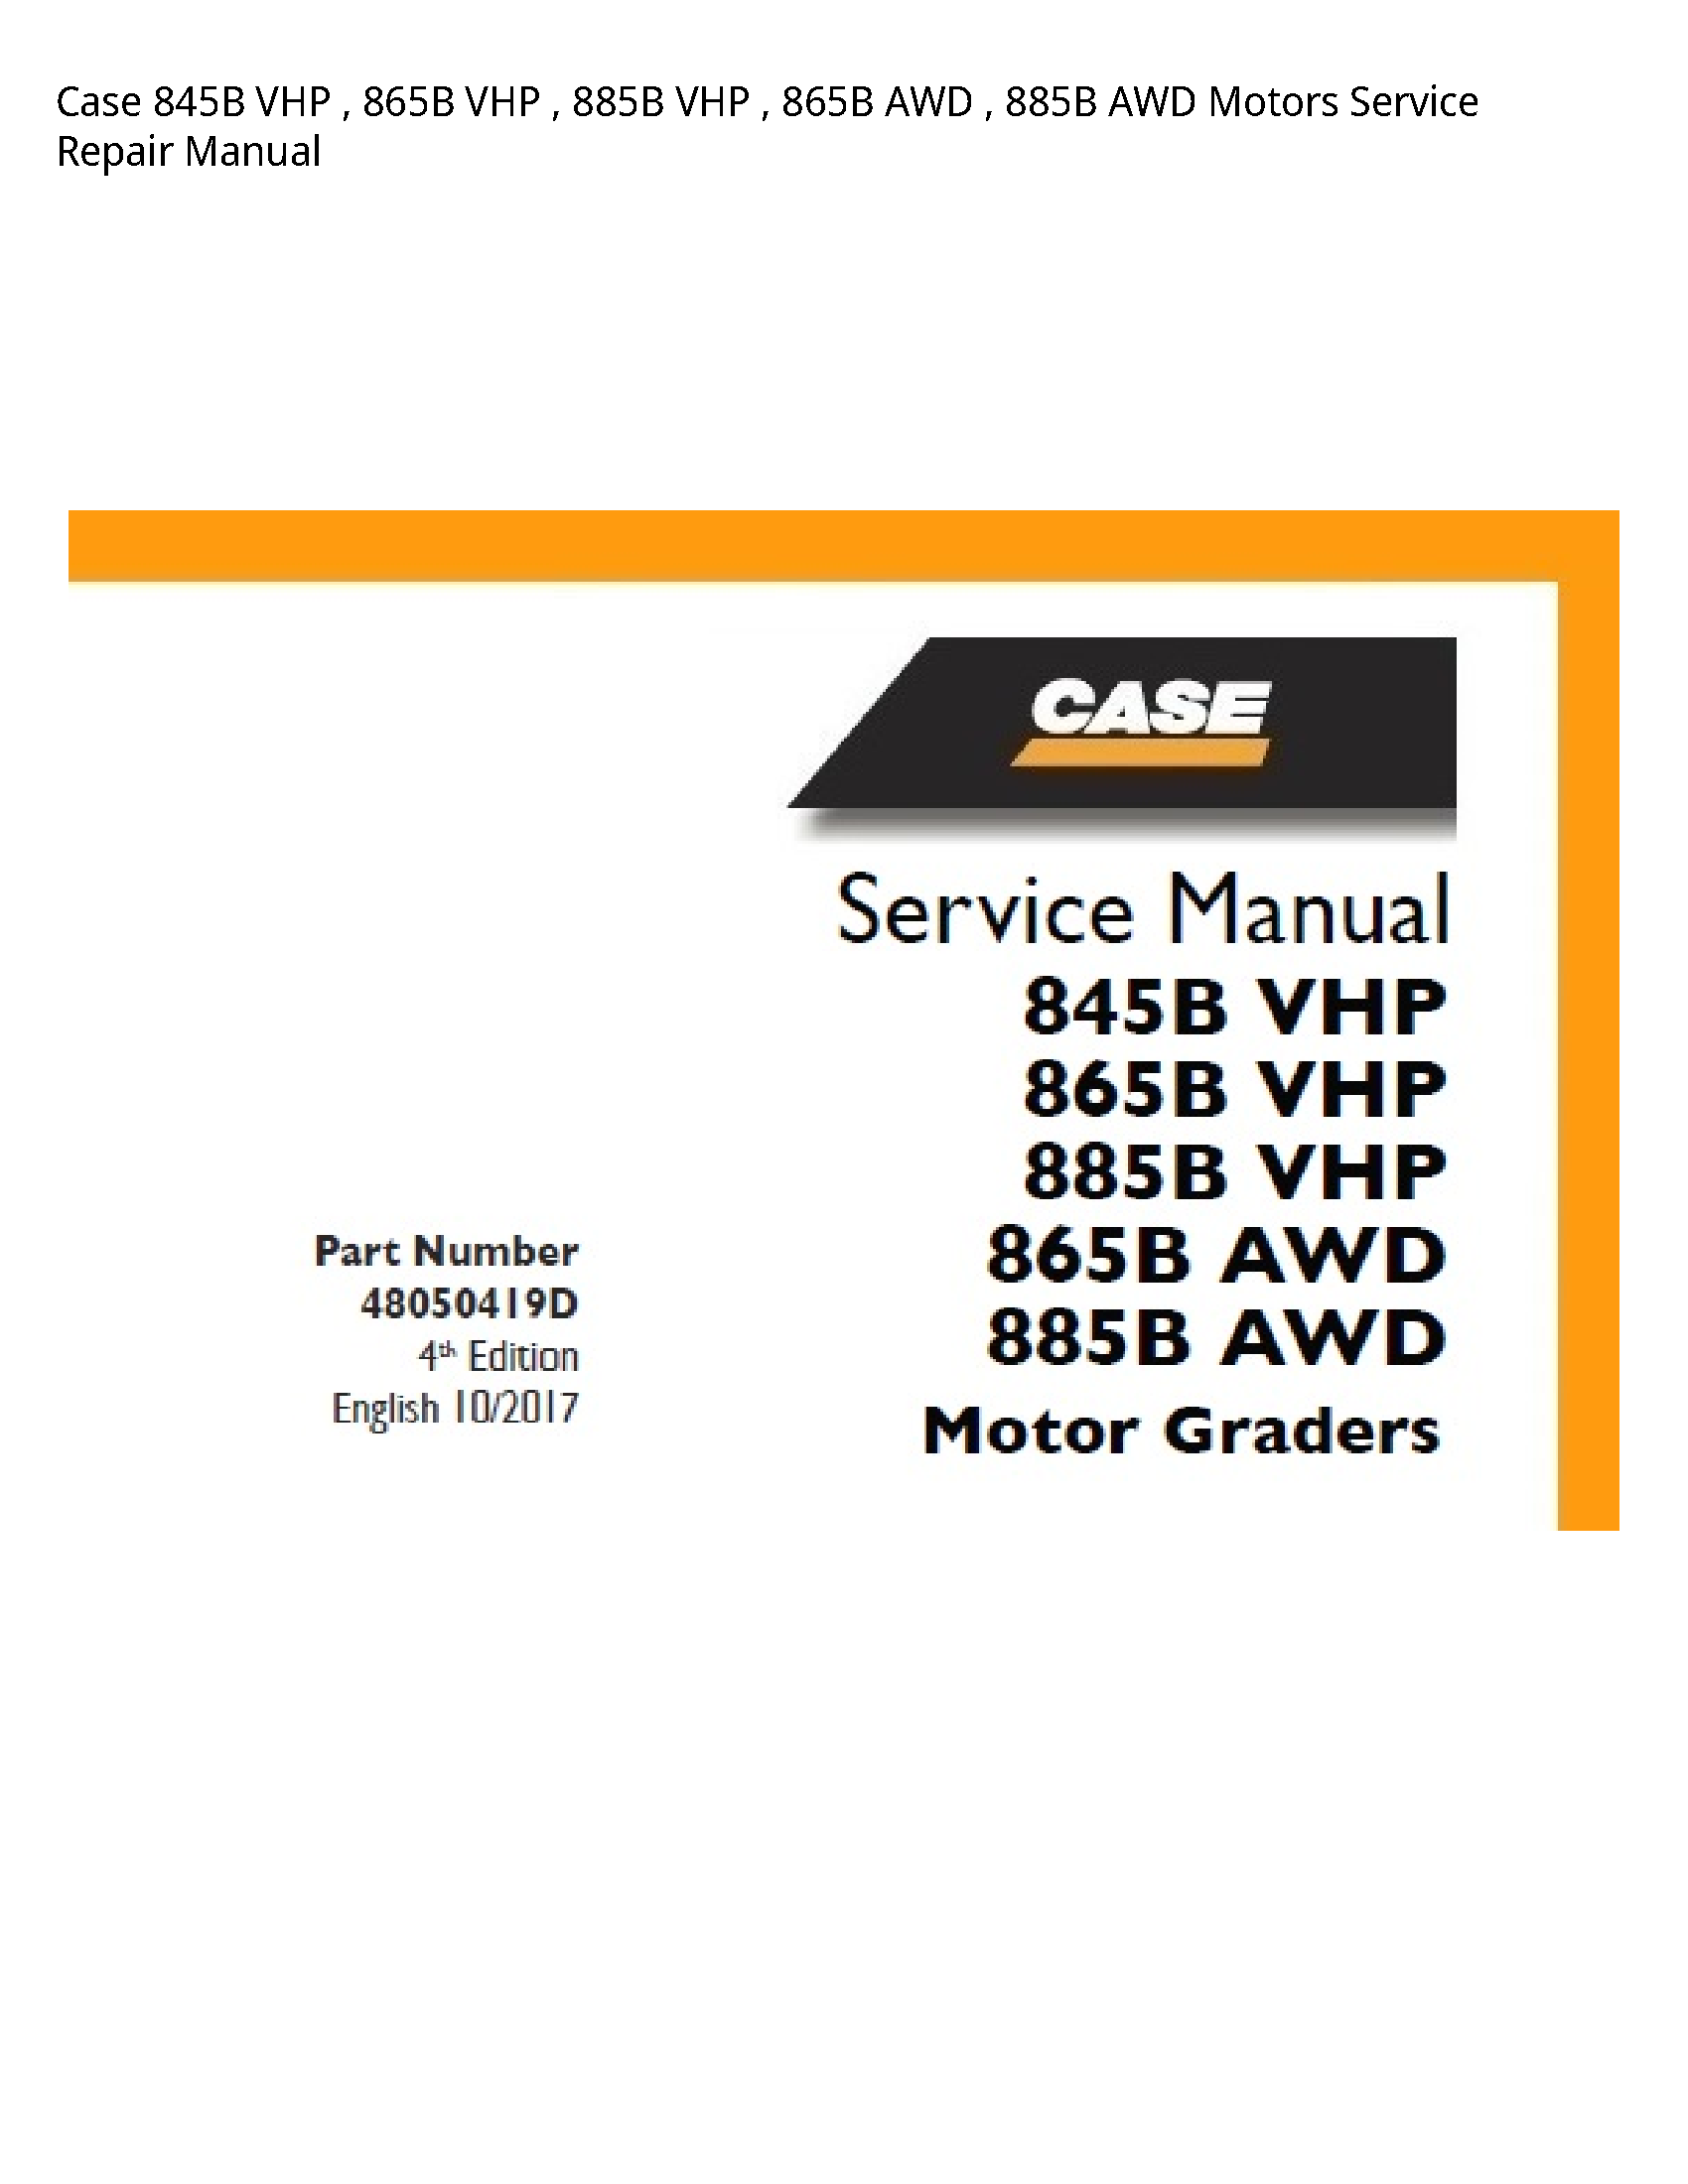 Case/Case IH 845B VHP VHP VHP AWD AWD Motors manual